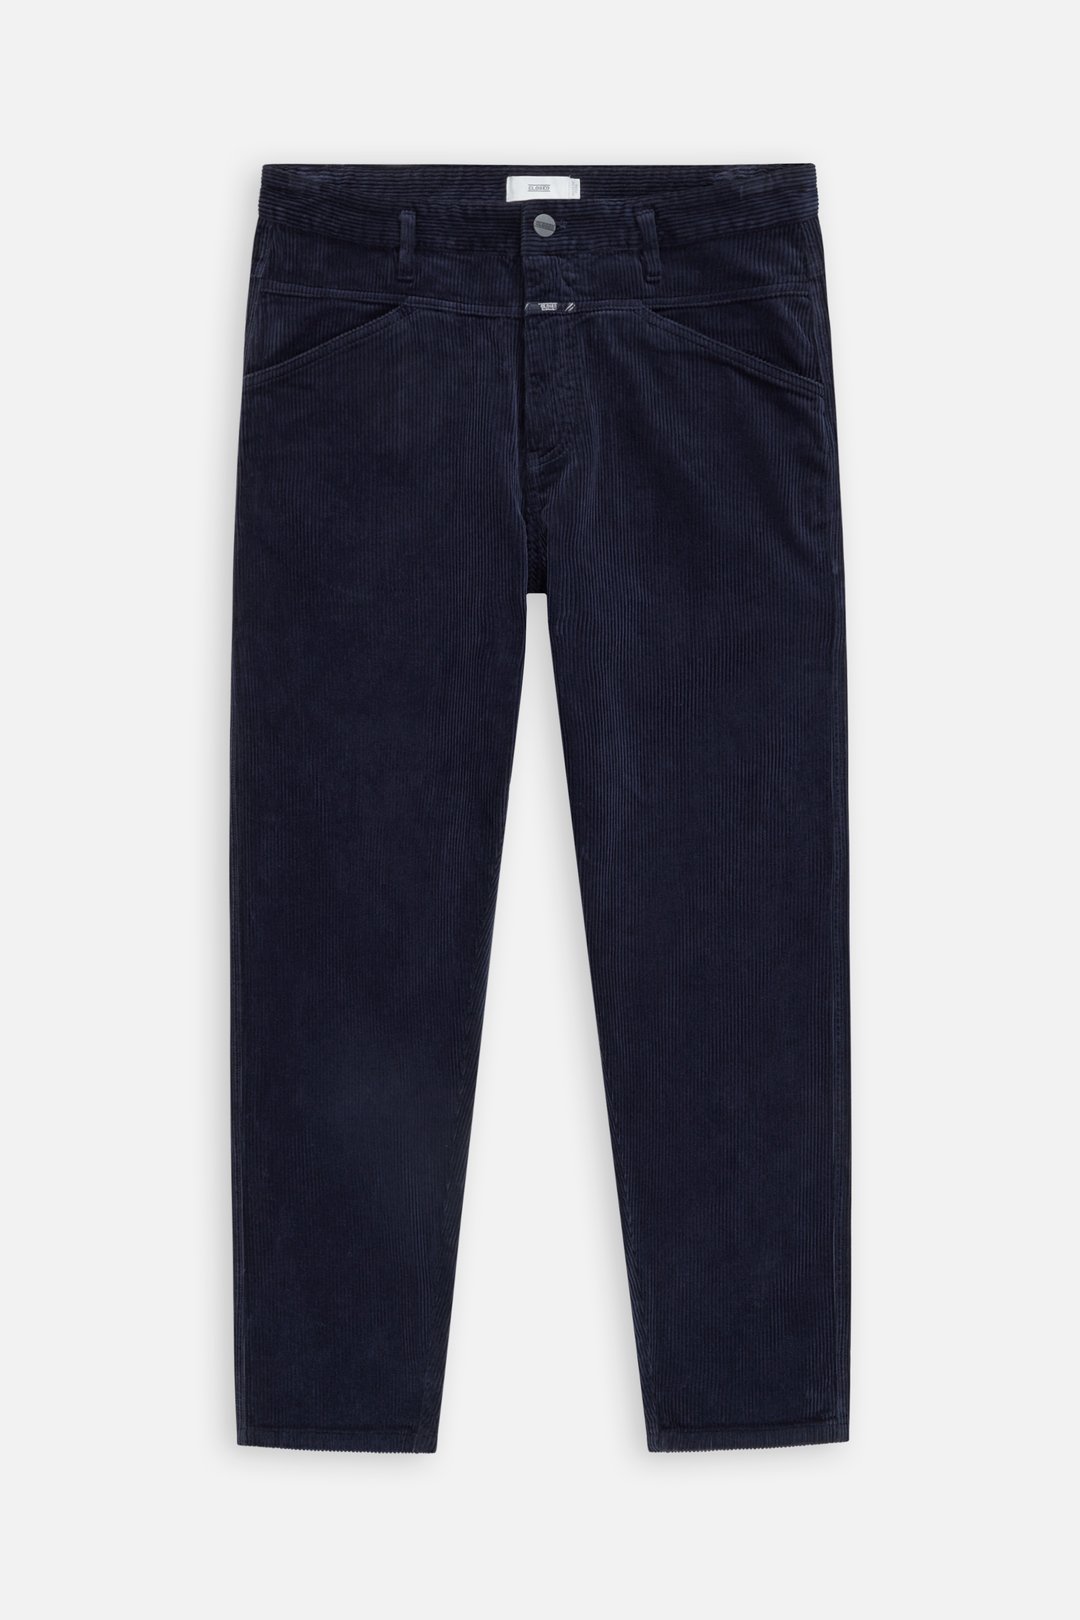 MEN FASHION Trousers Corduroy Springfield slacks Navy Blue 42                  EU discount 99% 